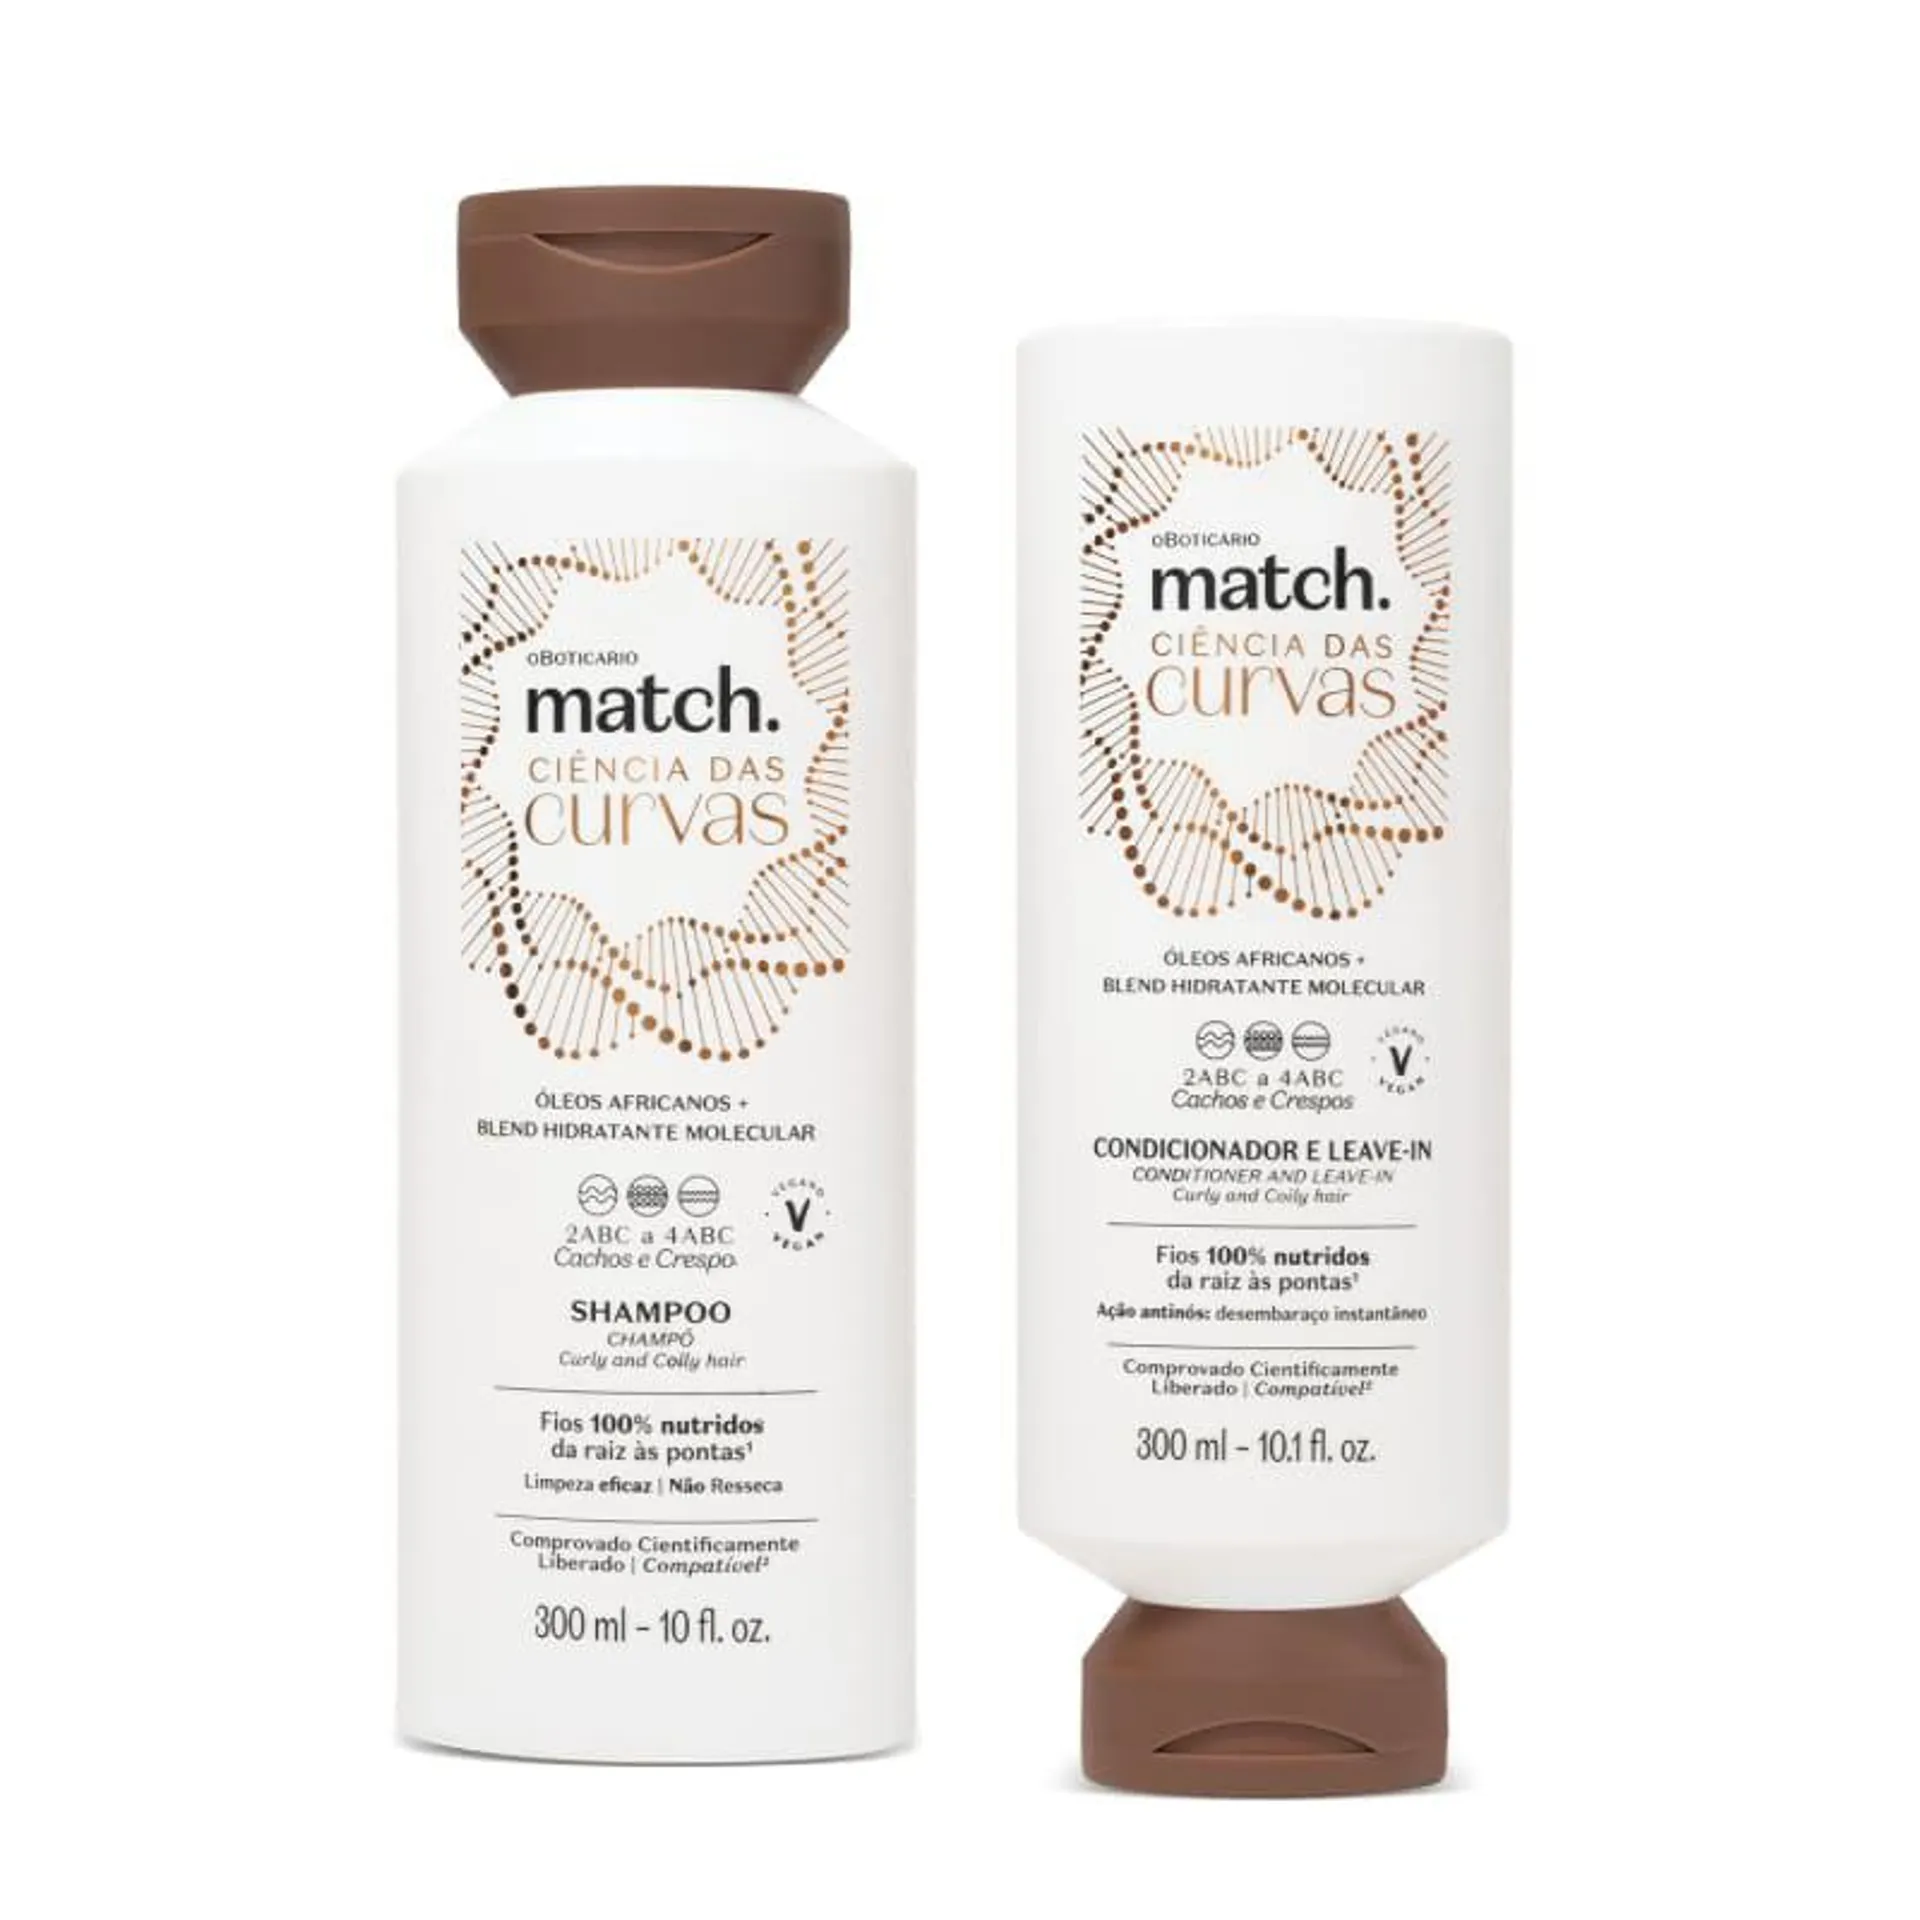 Combo Match Ciência das Curvas: Shampoo 300ml + Condicionador E Leave-In 300ml